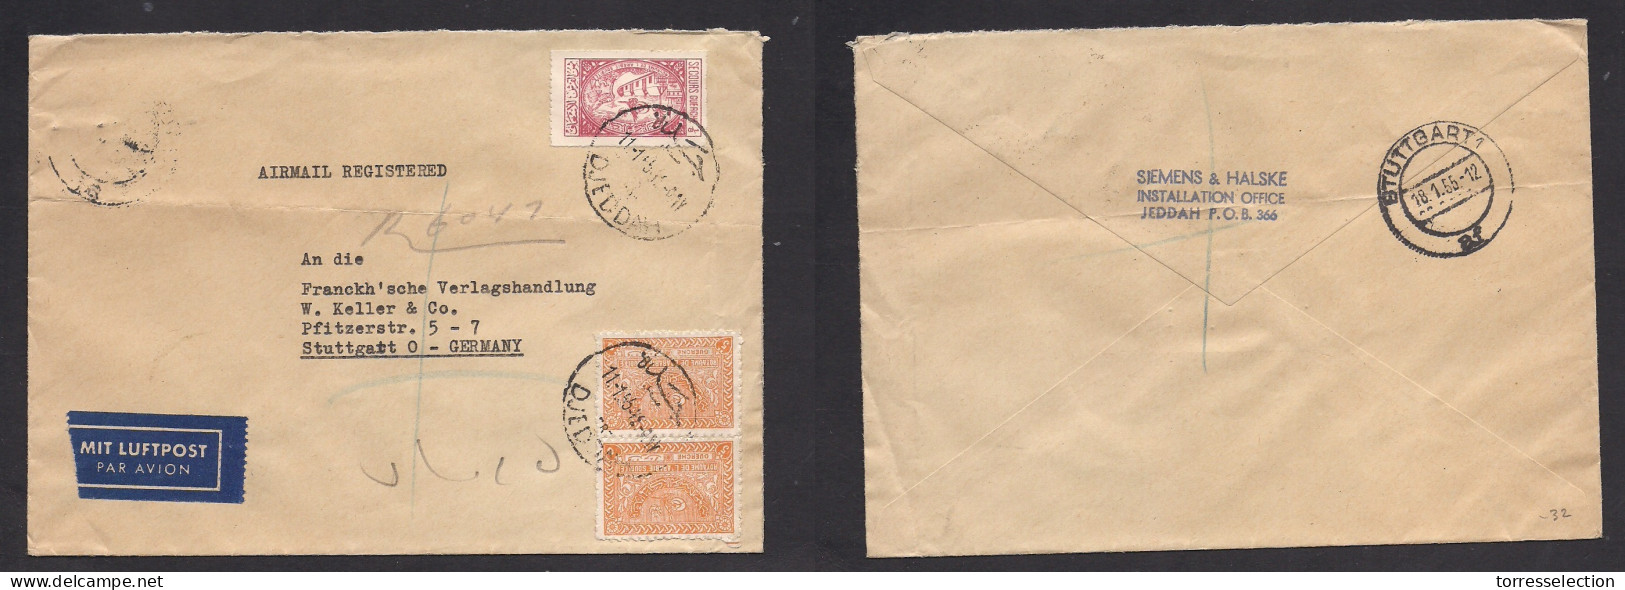 SAUDI ARABIA. 1955 (11 Jan) Djeddah - Stuttgart, Germany (18 Jan) Airmail Registered Multifkd Env. Fine. XSALE. - Saudi Arabia